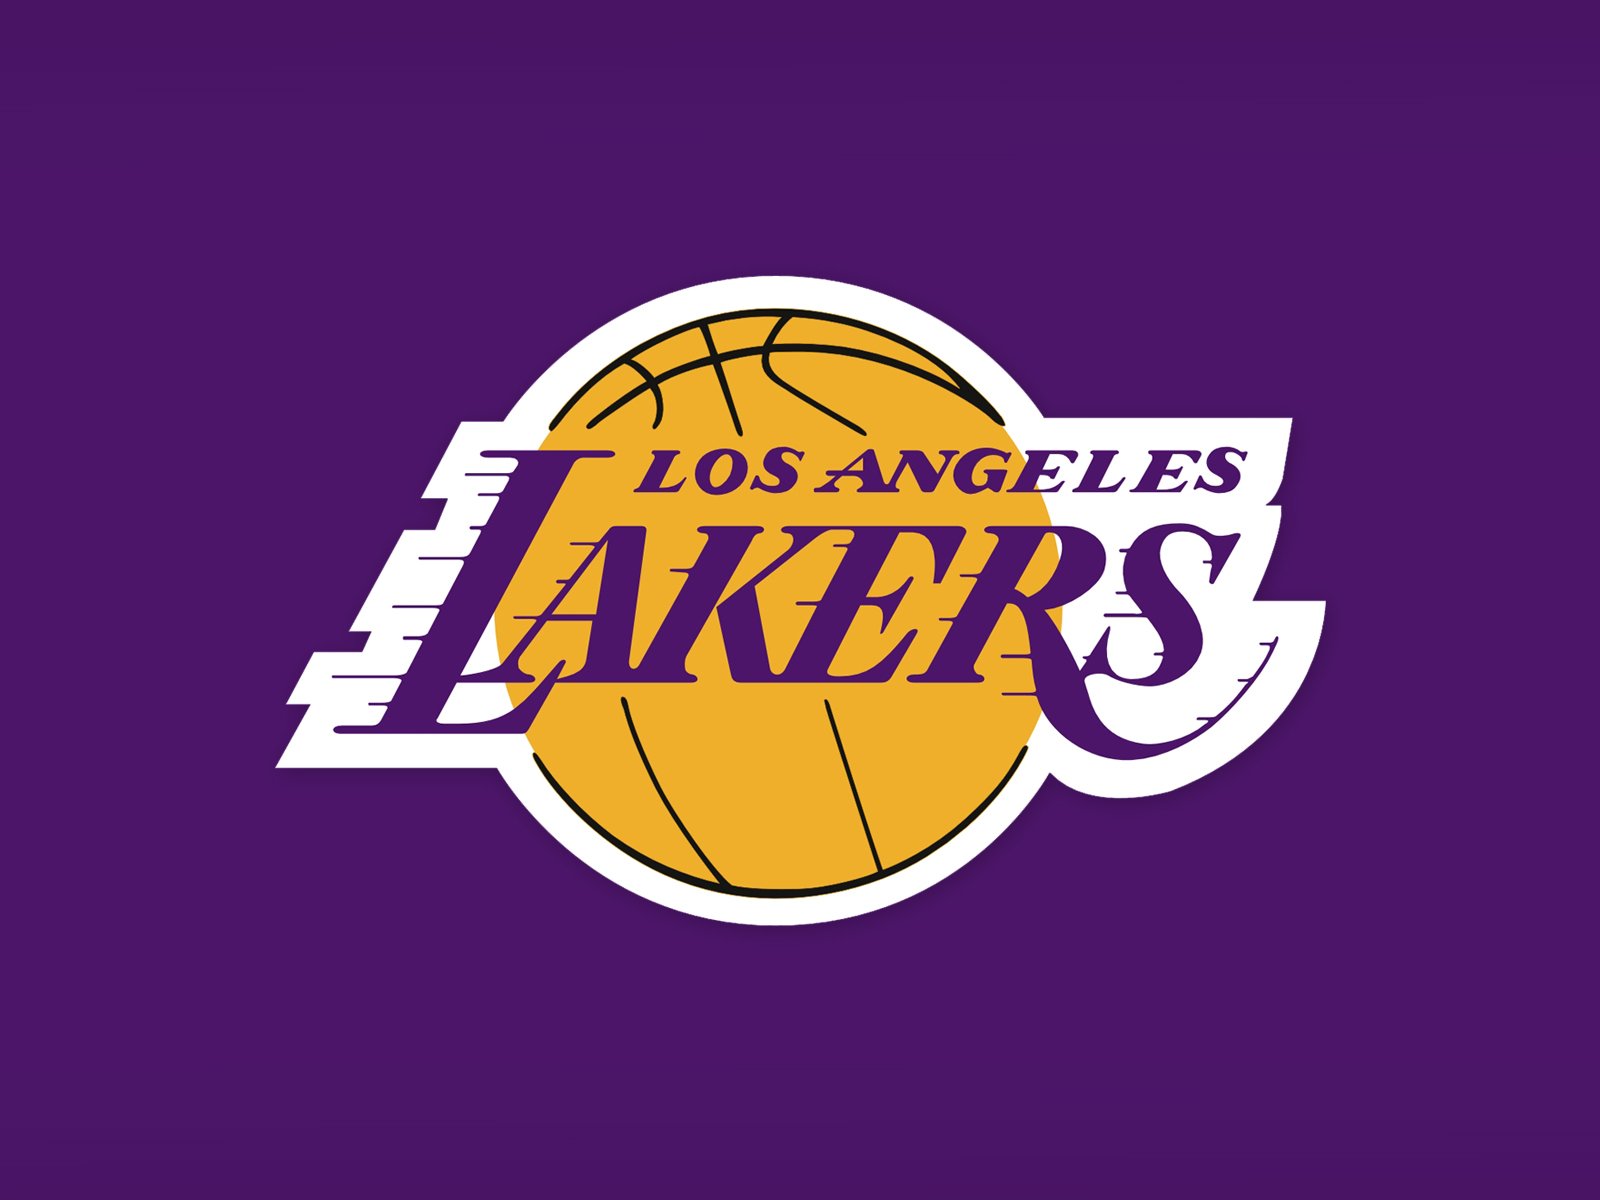 Lakers 24 Logo Wallpapers